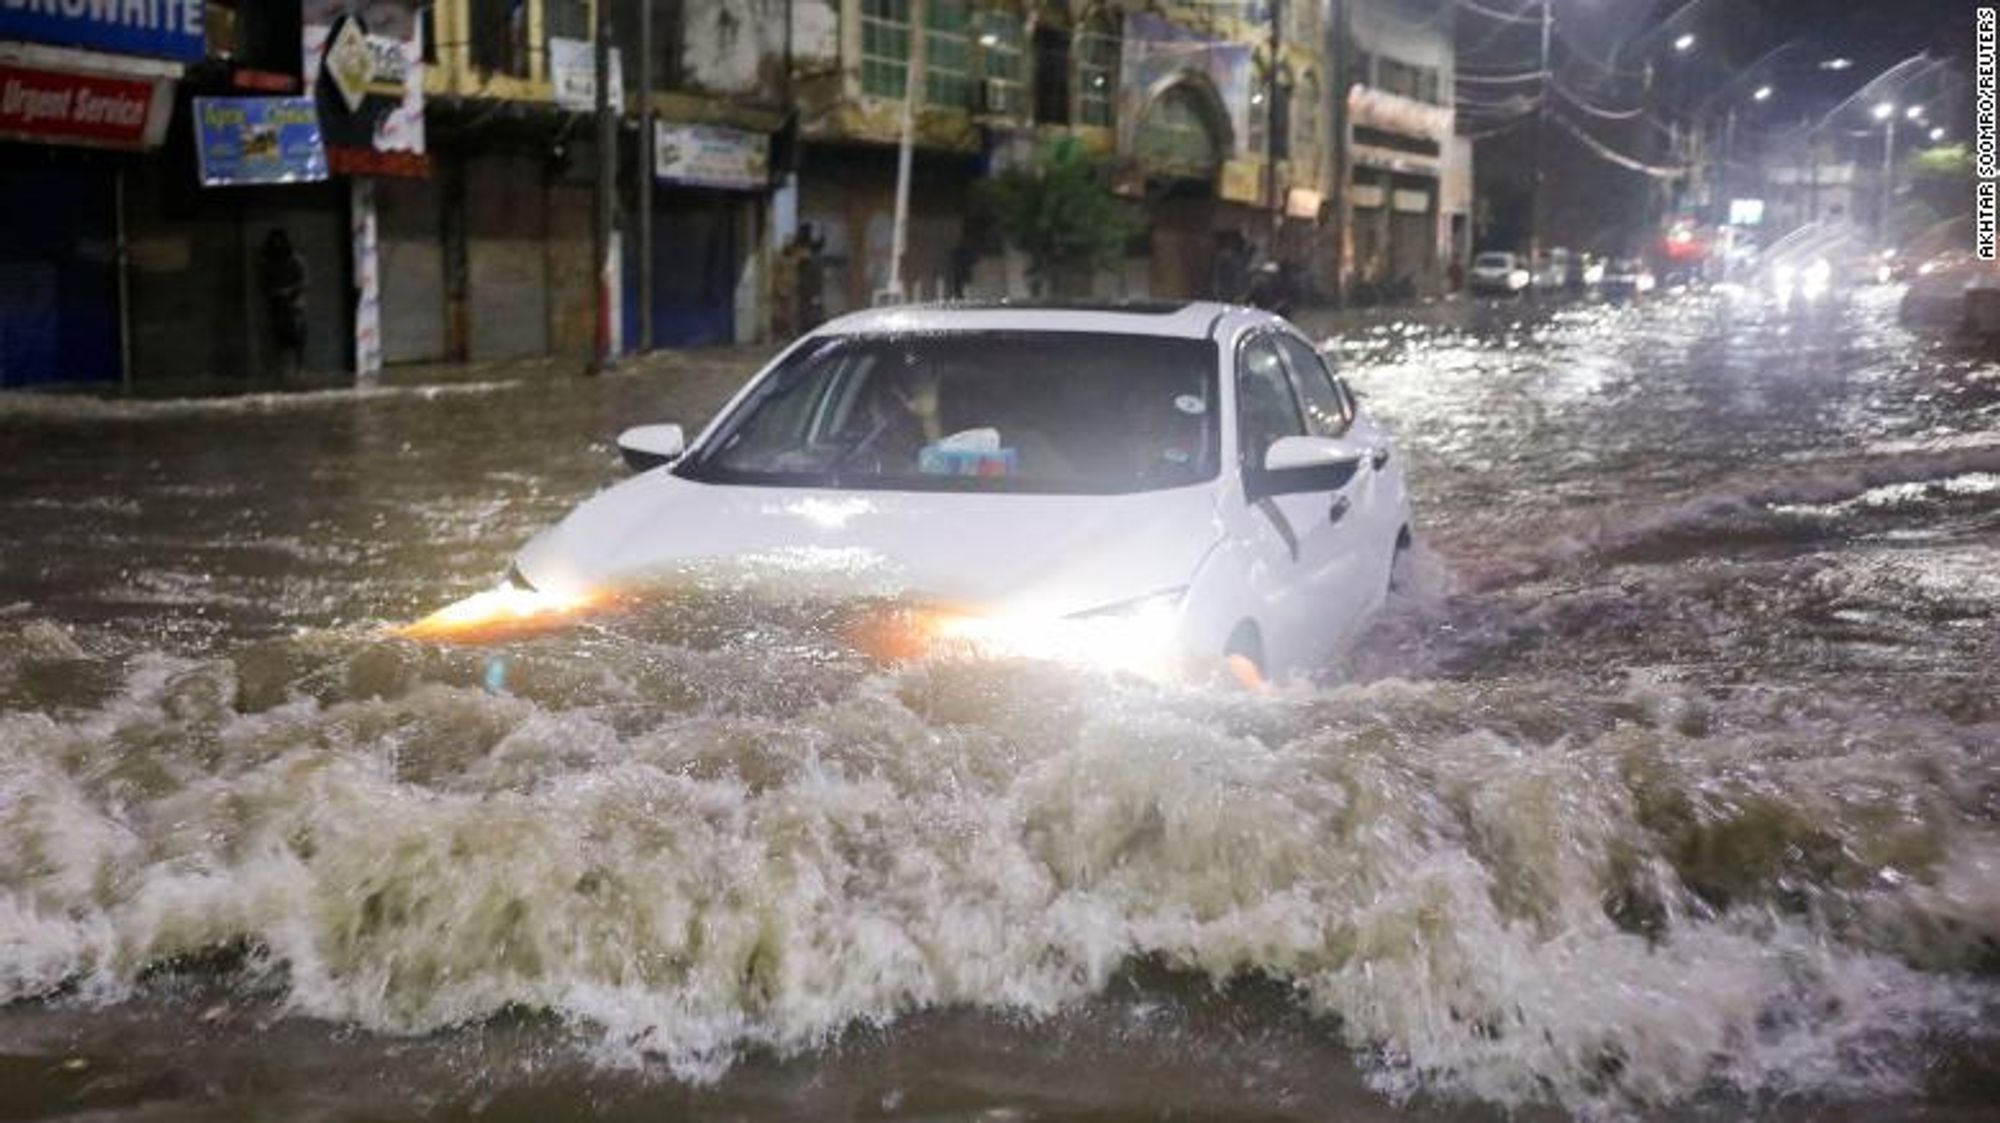 Pakistan rain: Karachi battered by torrential rain, as climate crisis makes weather more unpredictable - CNN